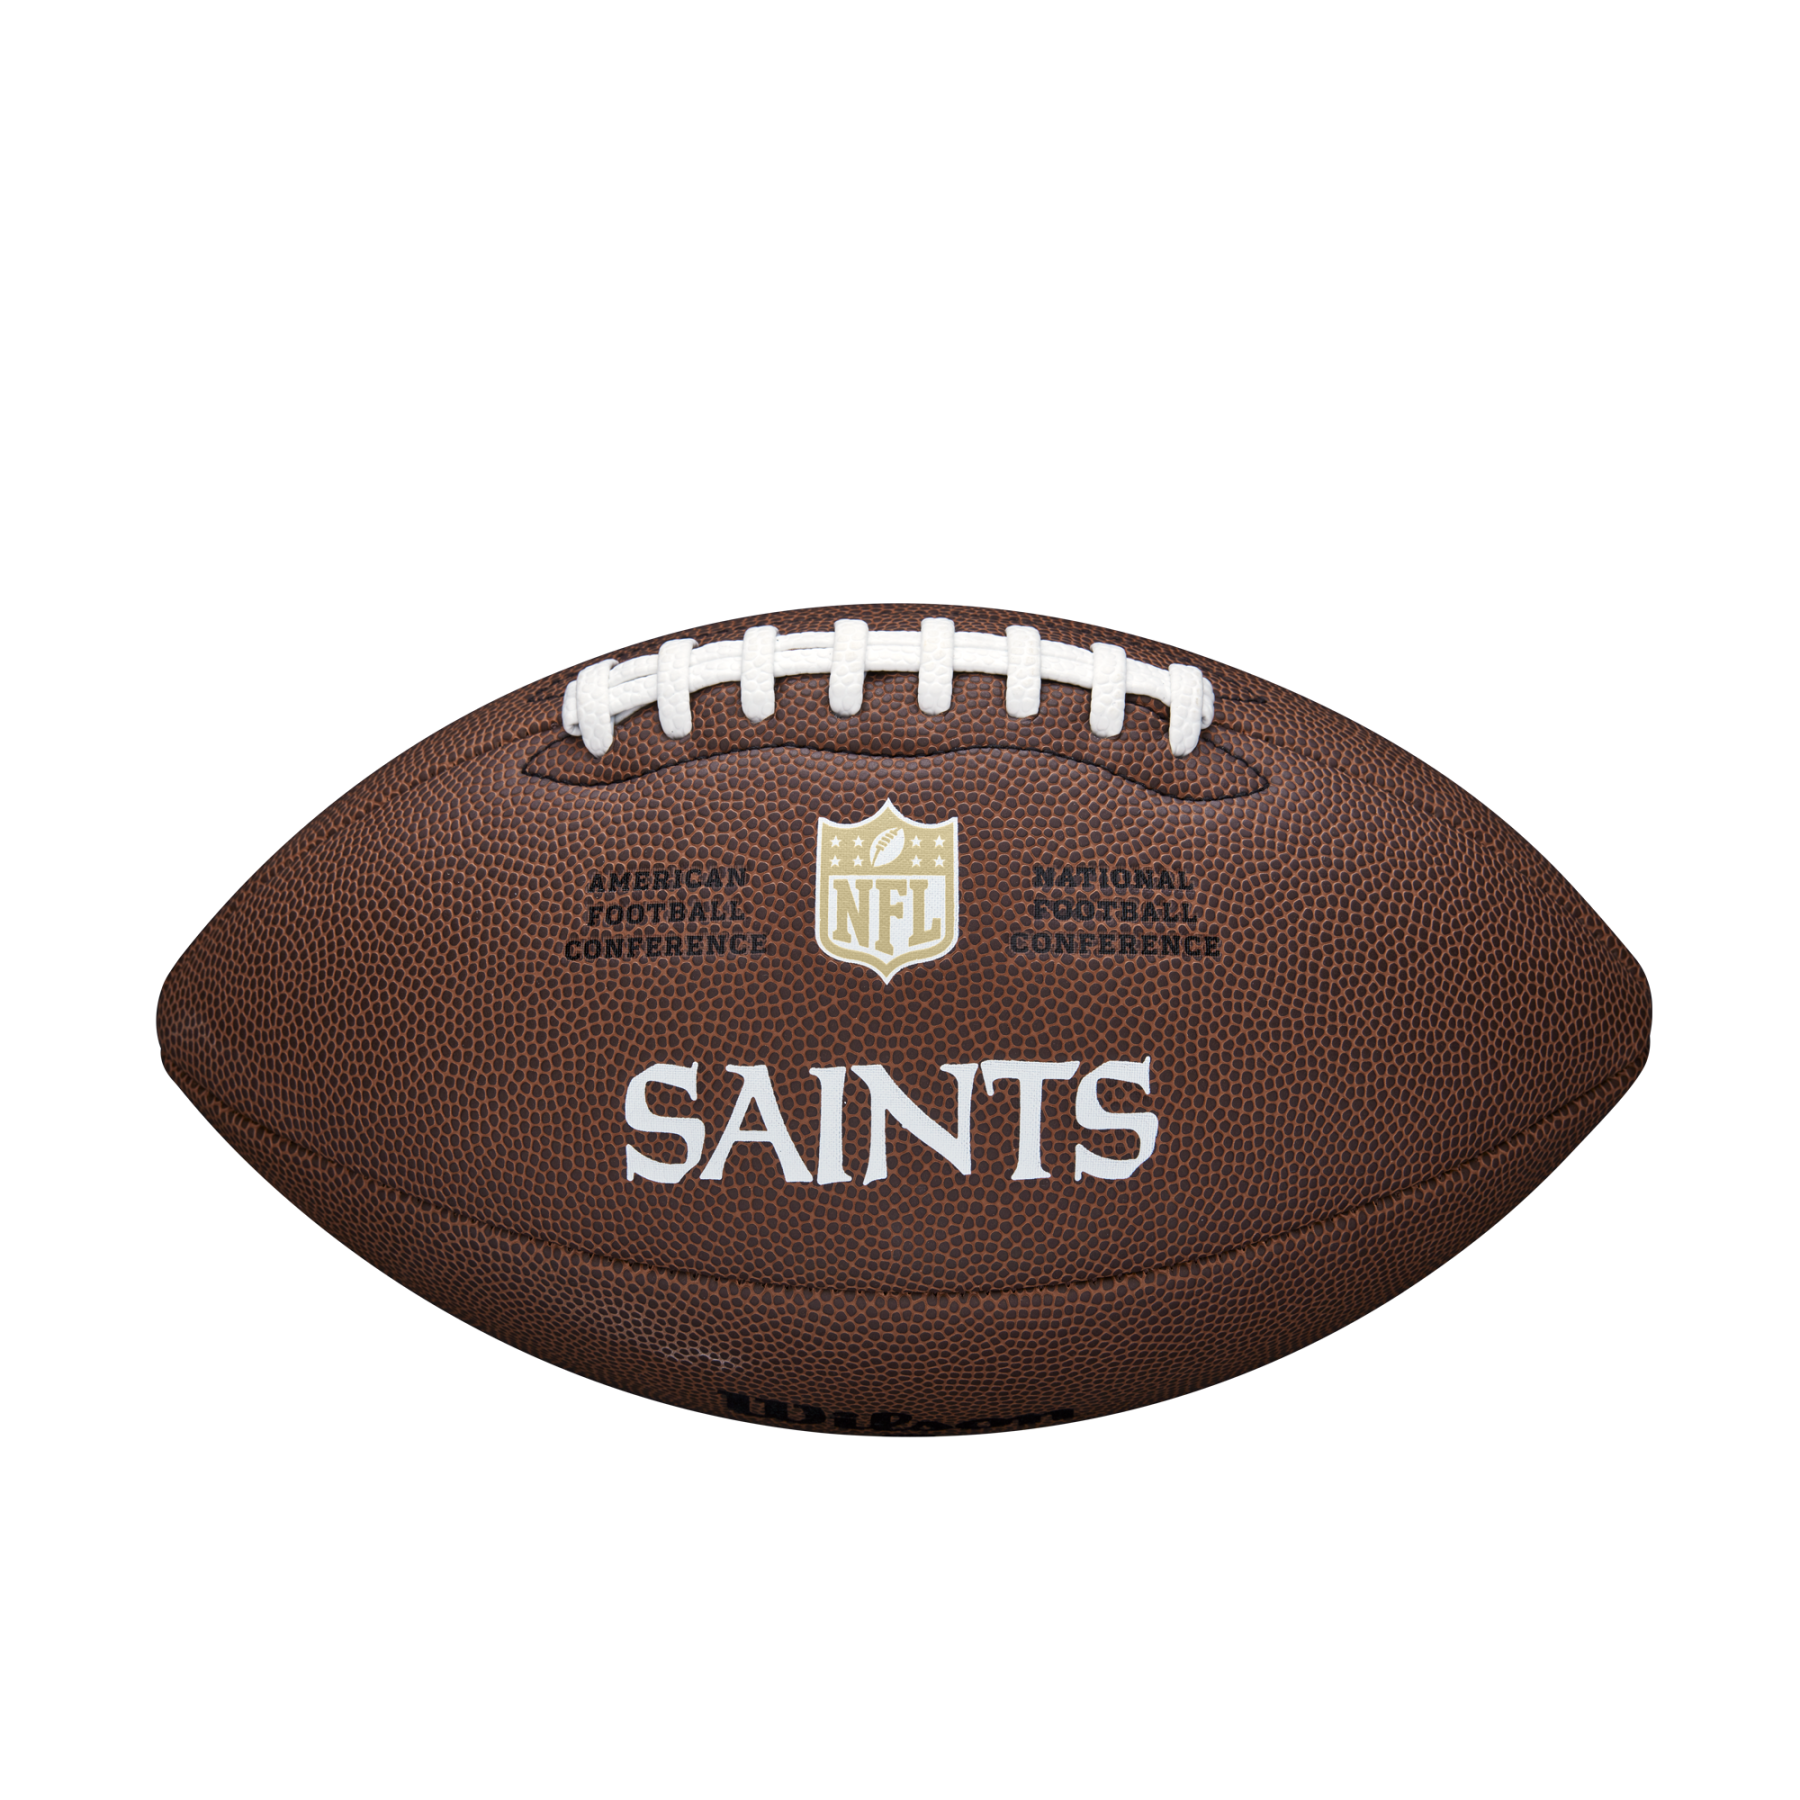 Bola Wilson Saints NFL com licença